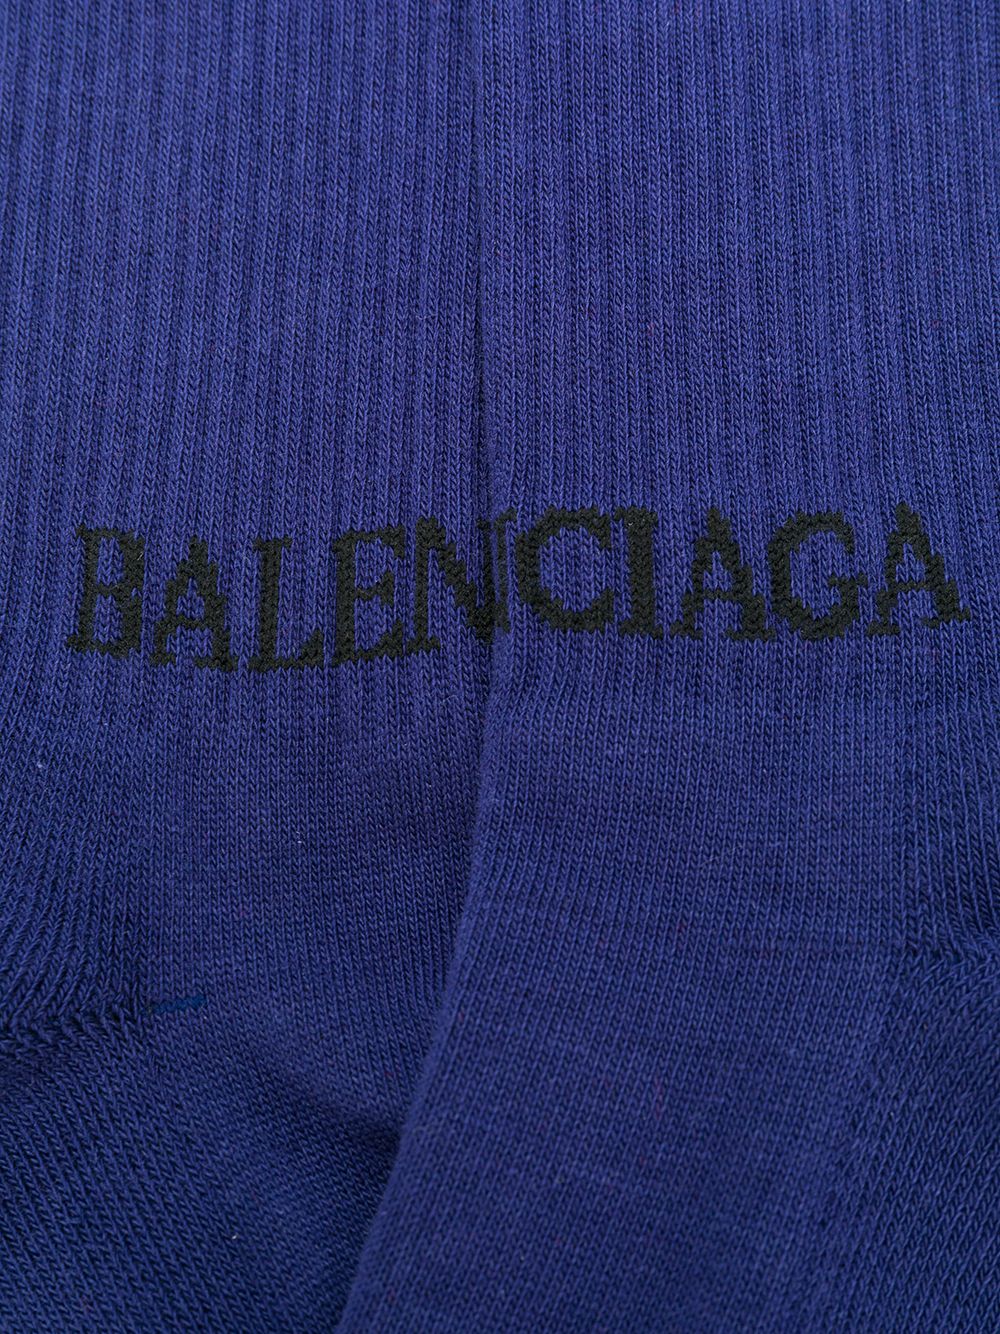 фото Balenciaga носки с логотипом